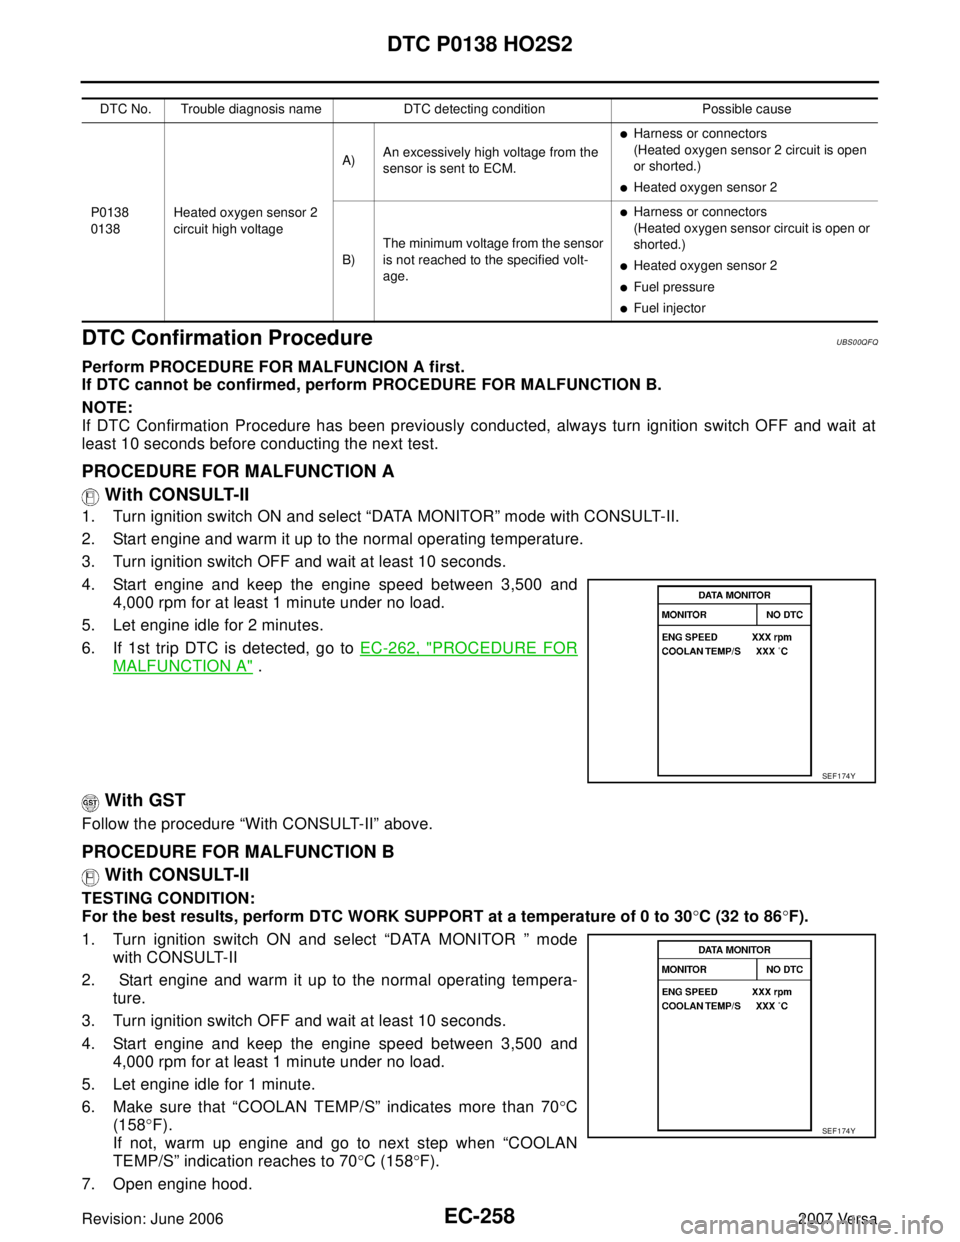 NISSAN TIIDA 2007  Service Repair Manual EC-258Revision: June 2006
DTC P0138 HO2S2
2007 Versa
DTC Confirmation ProcedureUBS00QFQ
Perform PROCEDURE FOR MALFUNCION A first.
If DTC cannot be confirmed, perform PROCEDURE FOR MALFUNCTION B.
NOTE: